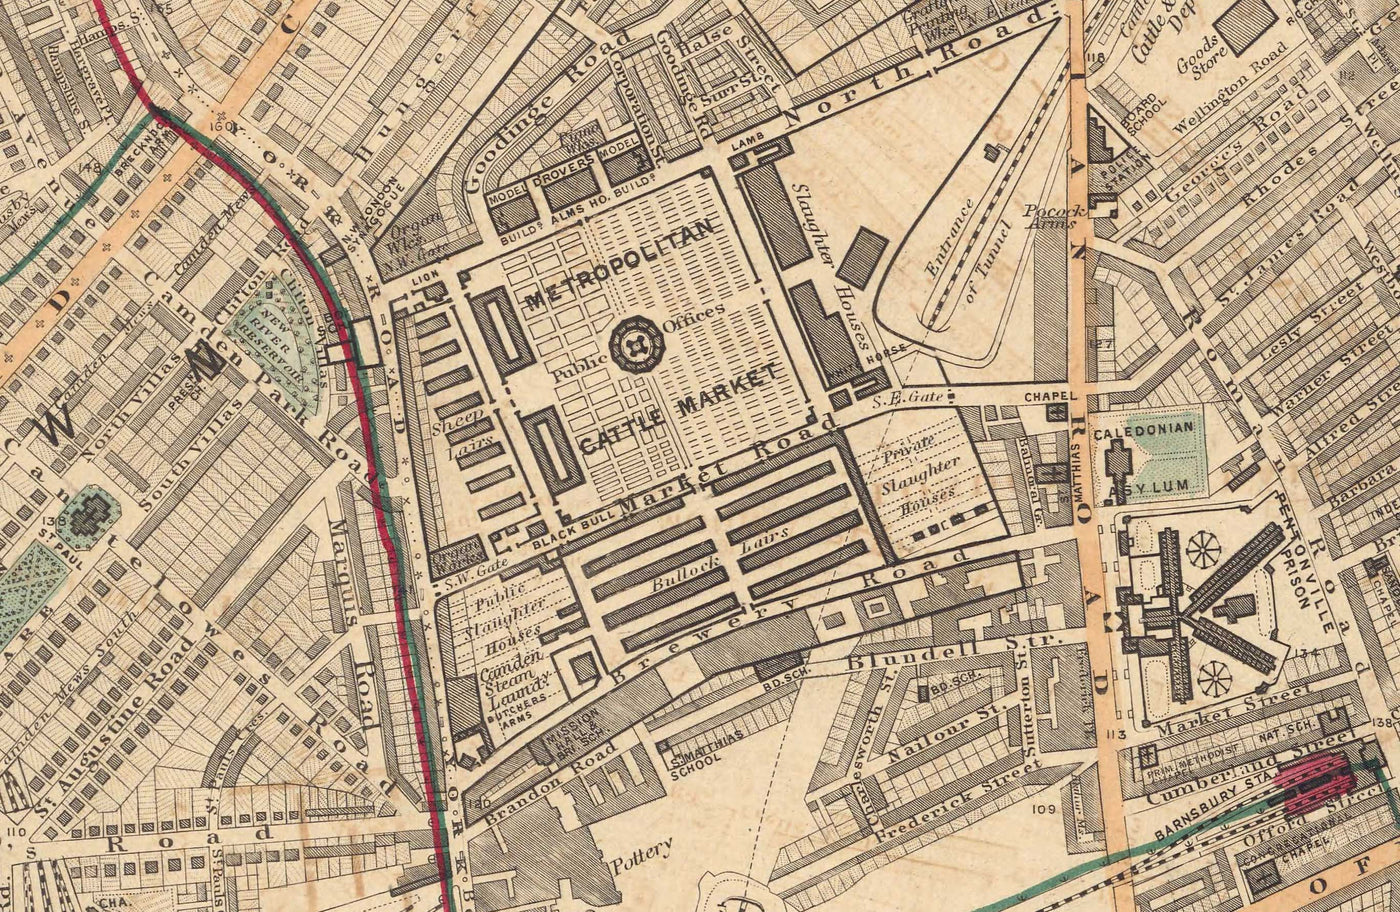 Antiguo mapa en color del norte de Londres, 1891 - Camden, Regents Park, Primrose Hill, Kentish Town, Kings Cross - NW1 N1C N7 NW5 NW3 NW8